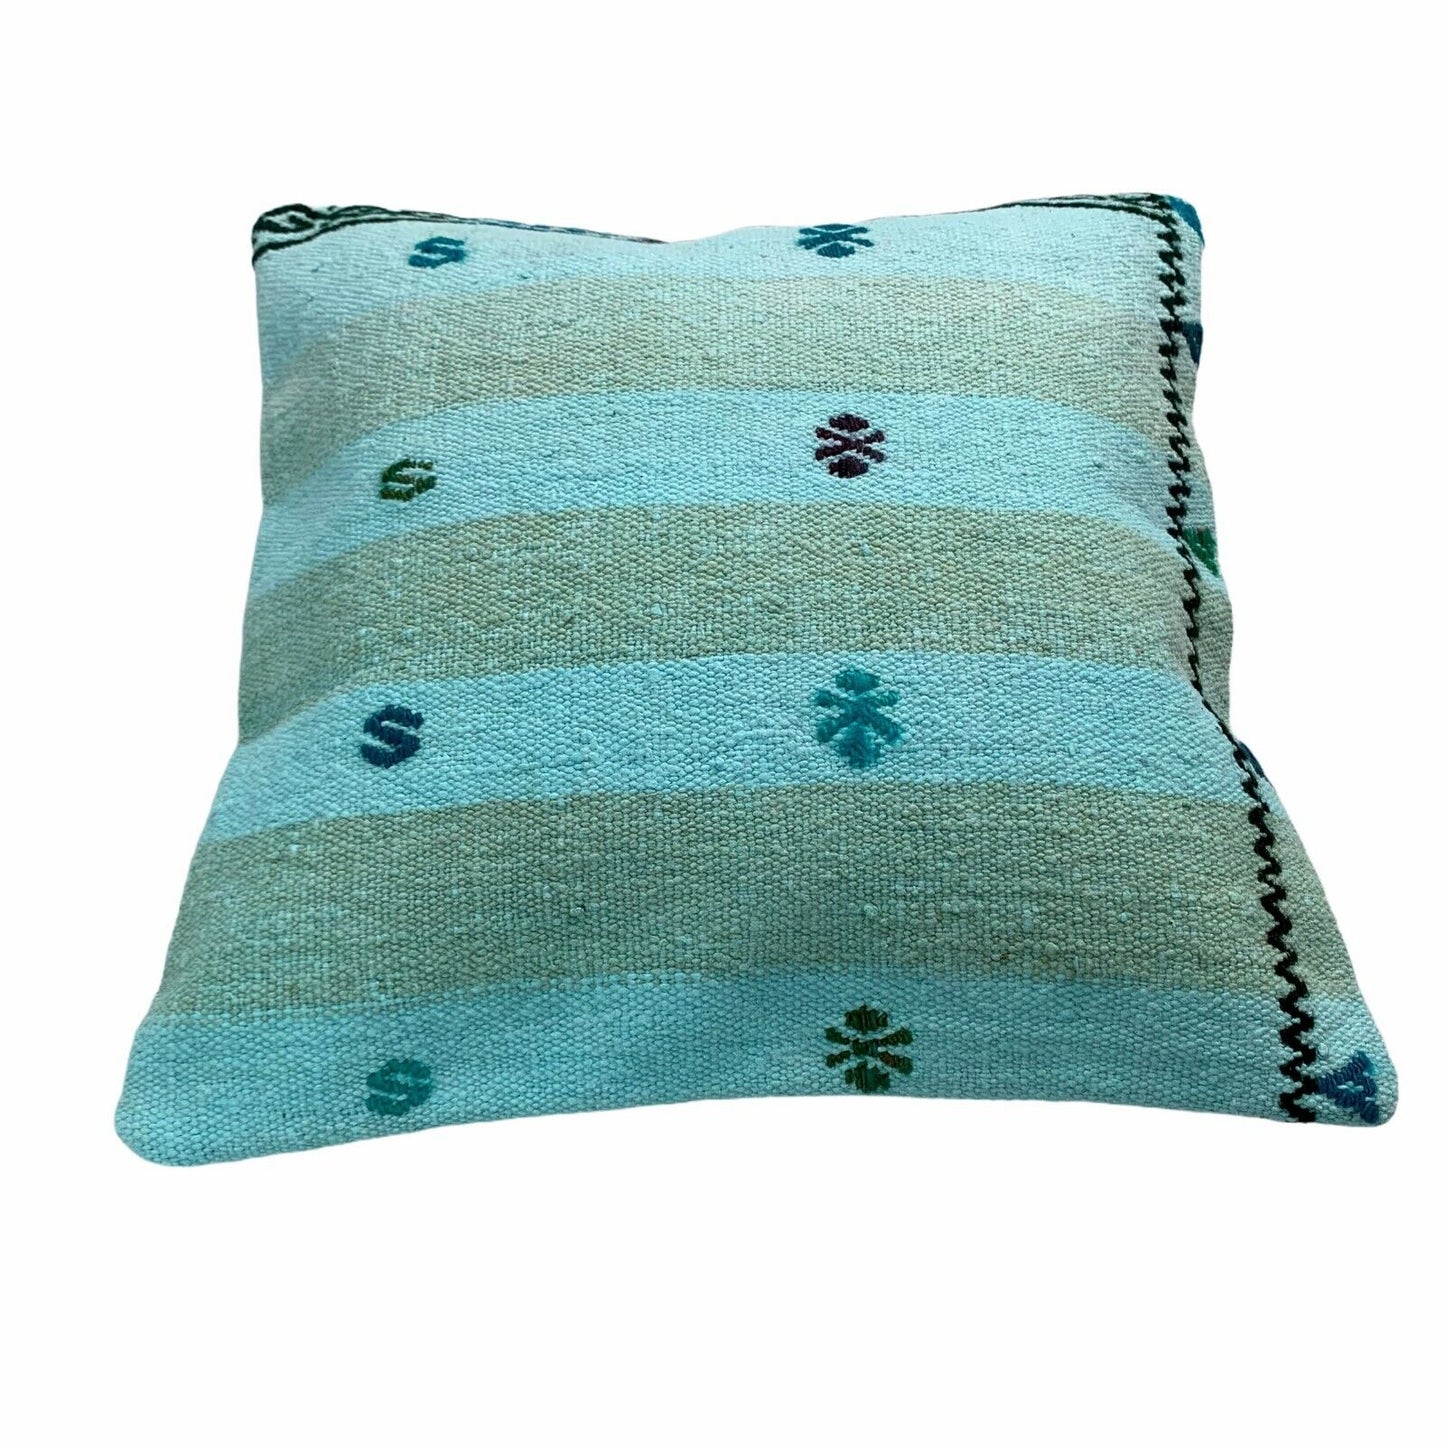 TURCO Kilim Federa, vintage tribale Kilim copertura per cuscino, 16''x 16"